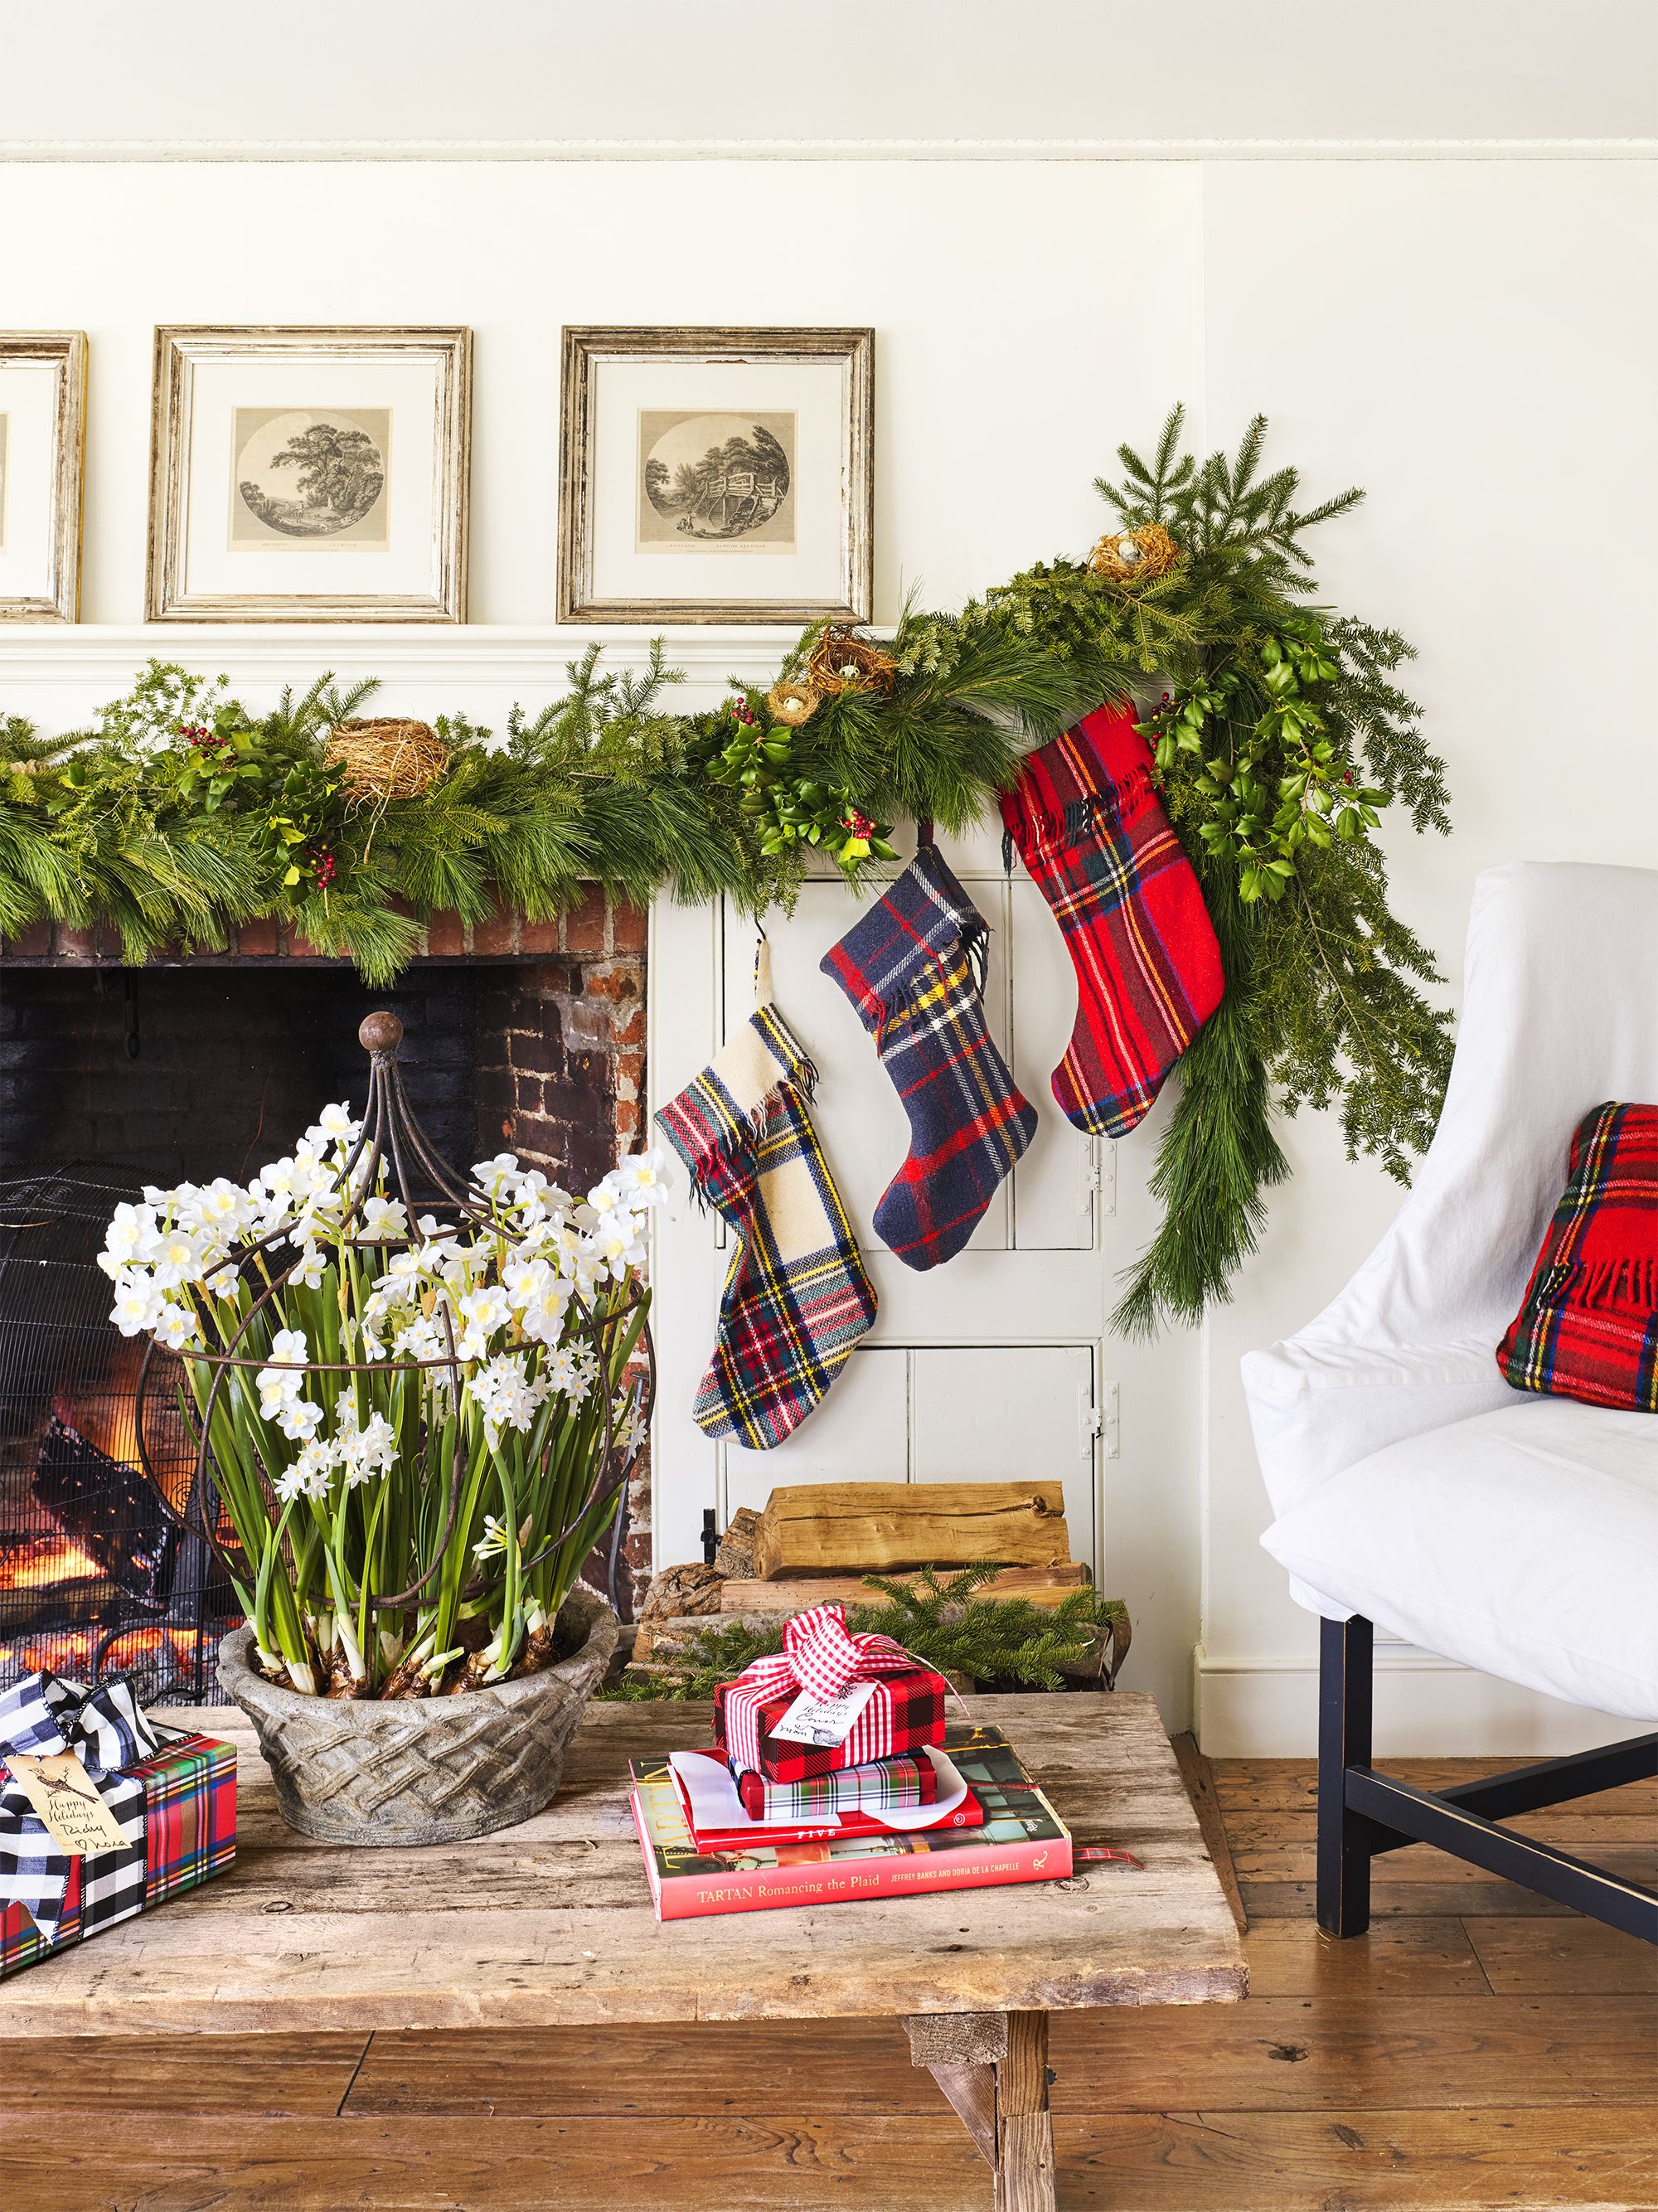 32 Stylish And Cozy Christmas Living Room Decor Ideas